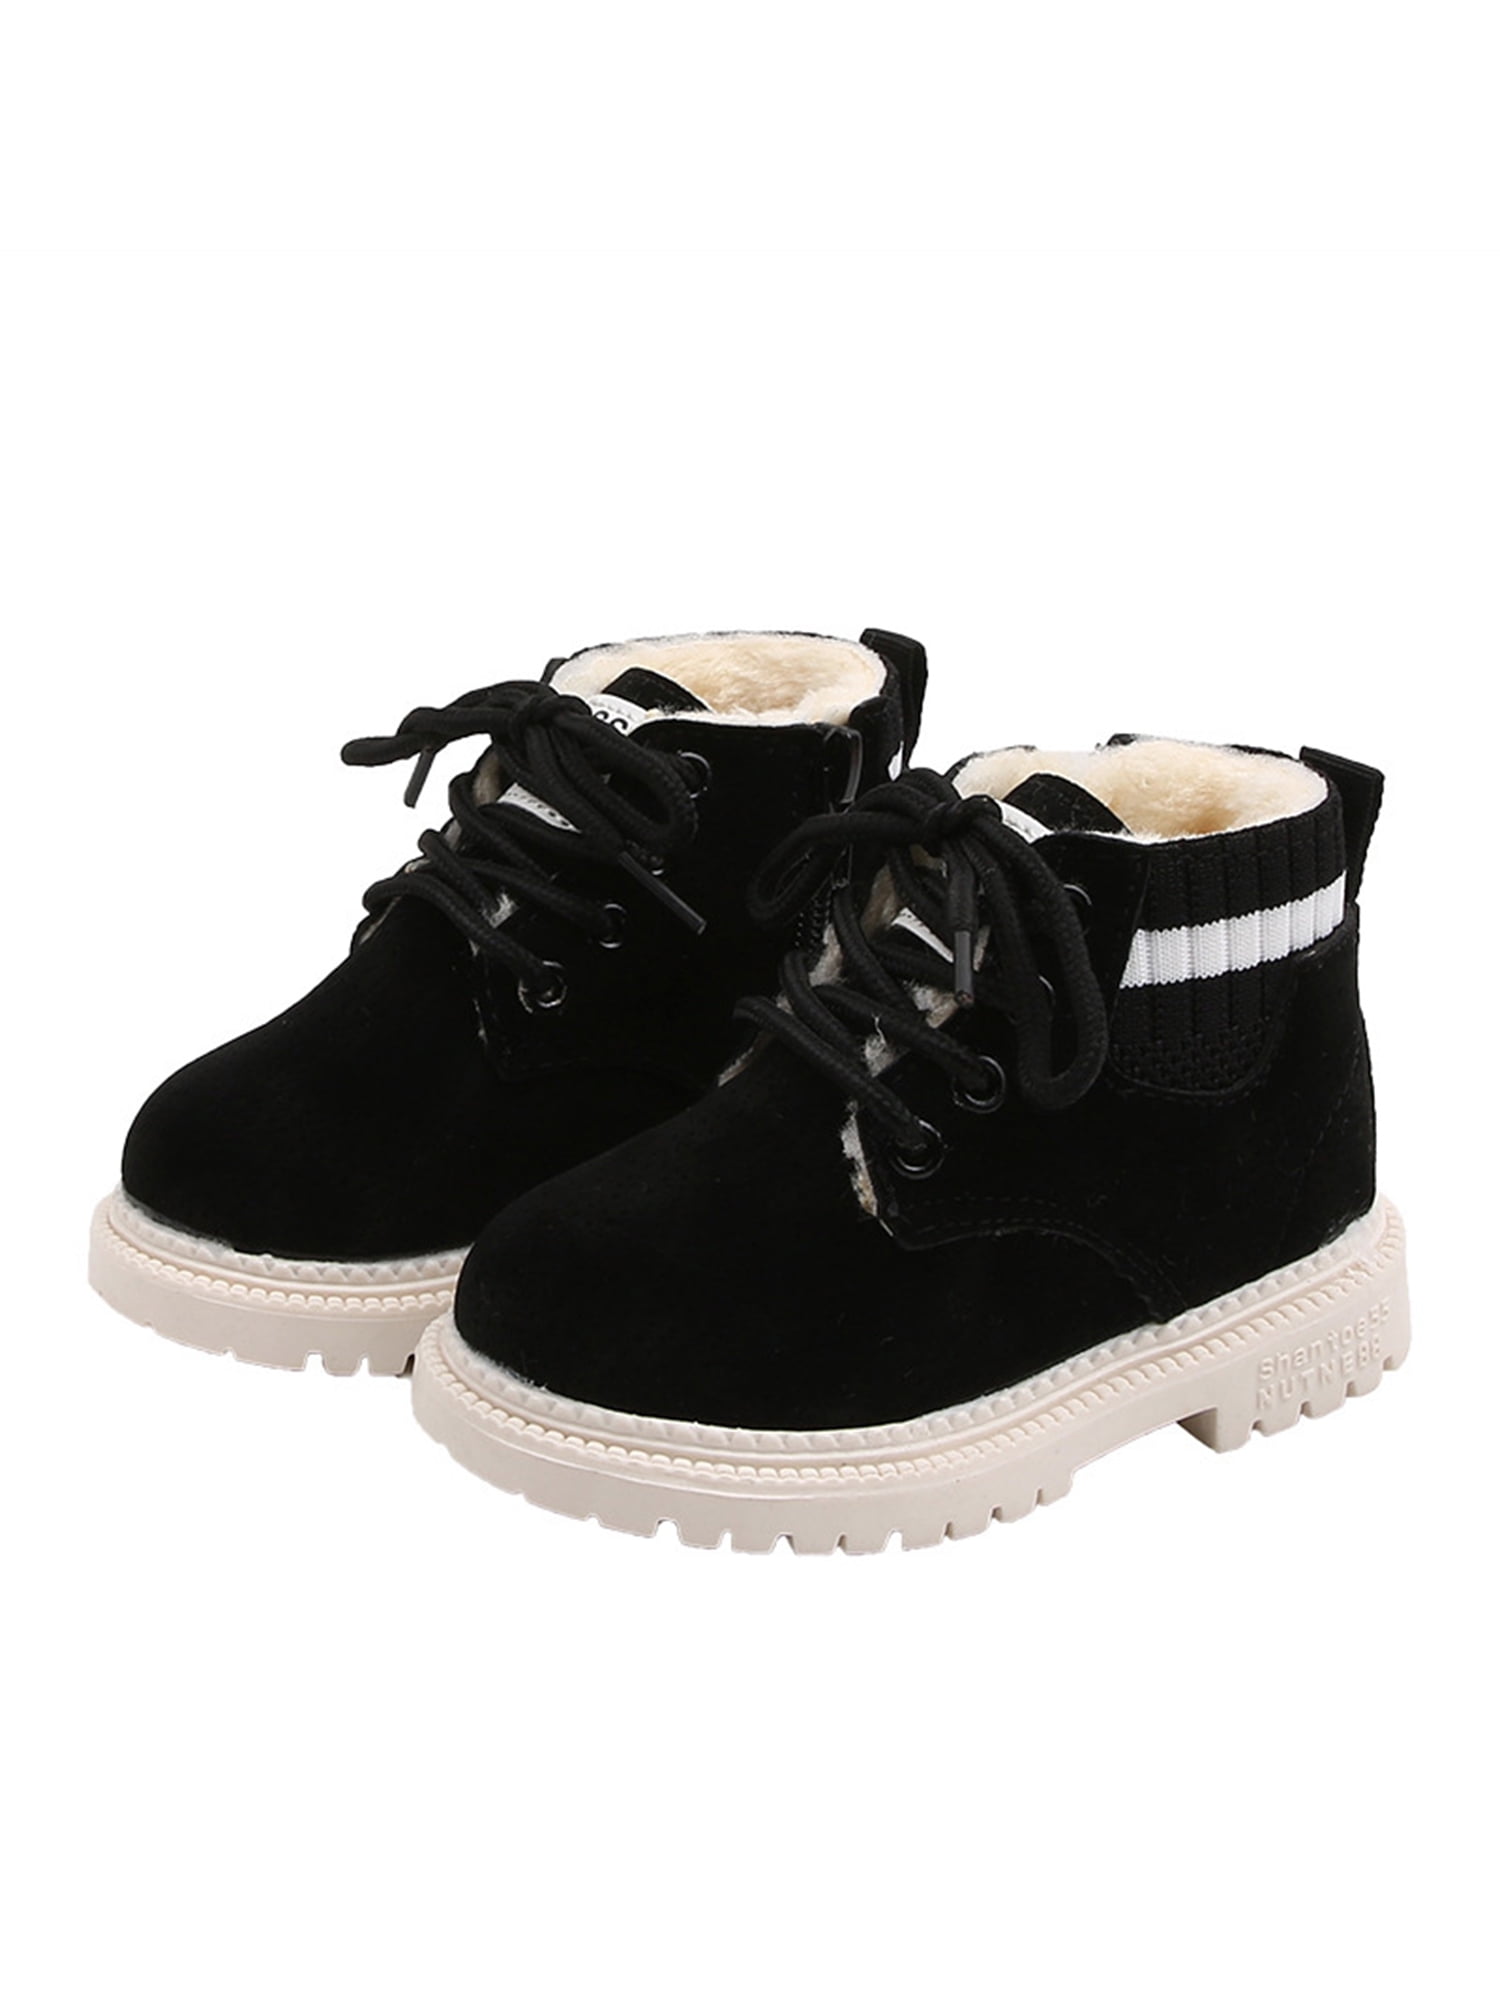 Eloshman Child Comfort Round Toe Winter Boot Non-Slip School Shoes Breathable Zipper Snow Boots Black 4.5C Walmart.com